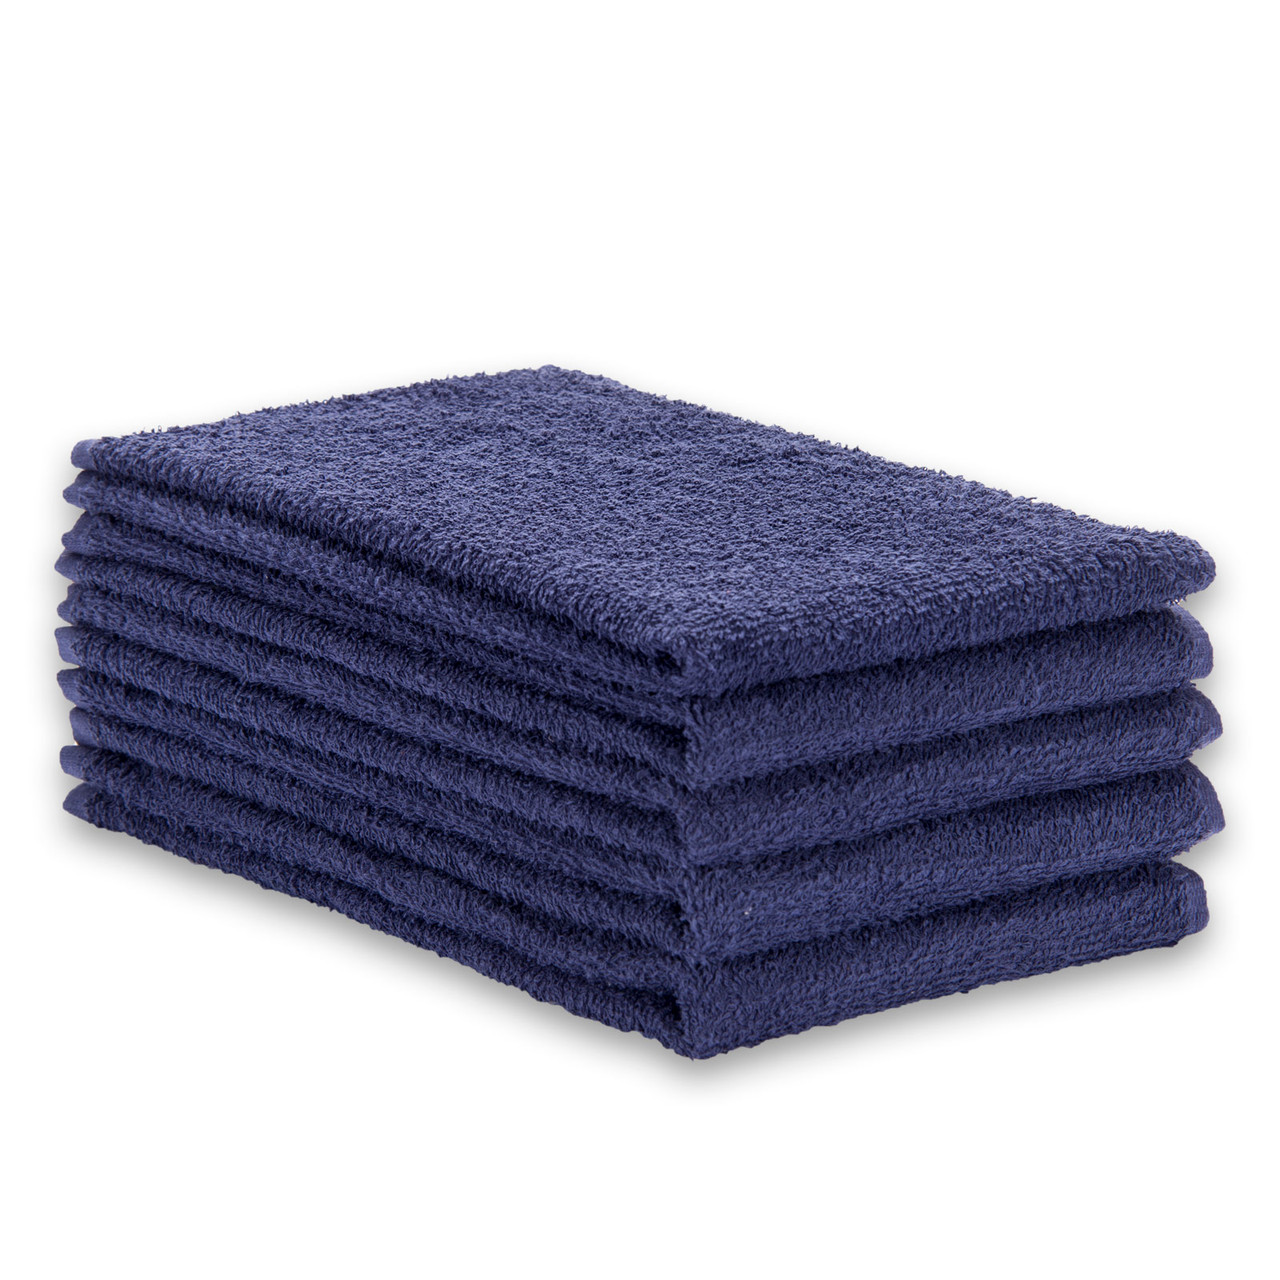 Bath hand towel miasma cotton terry - 16x28